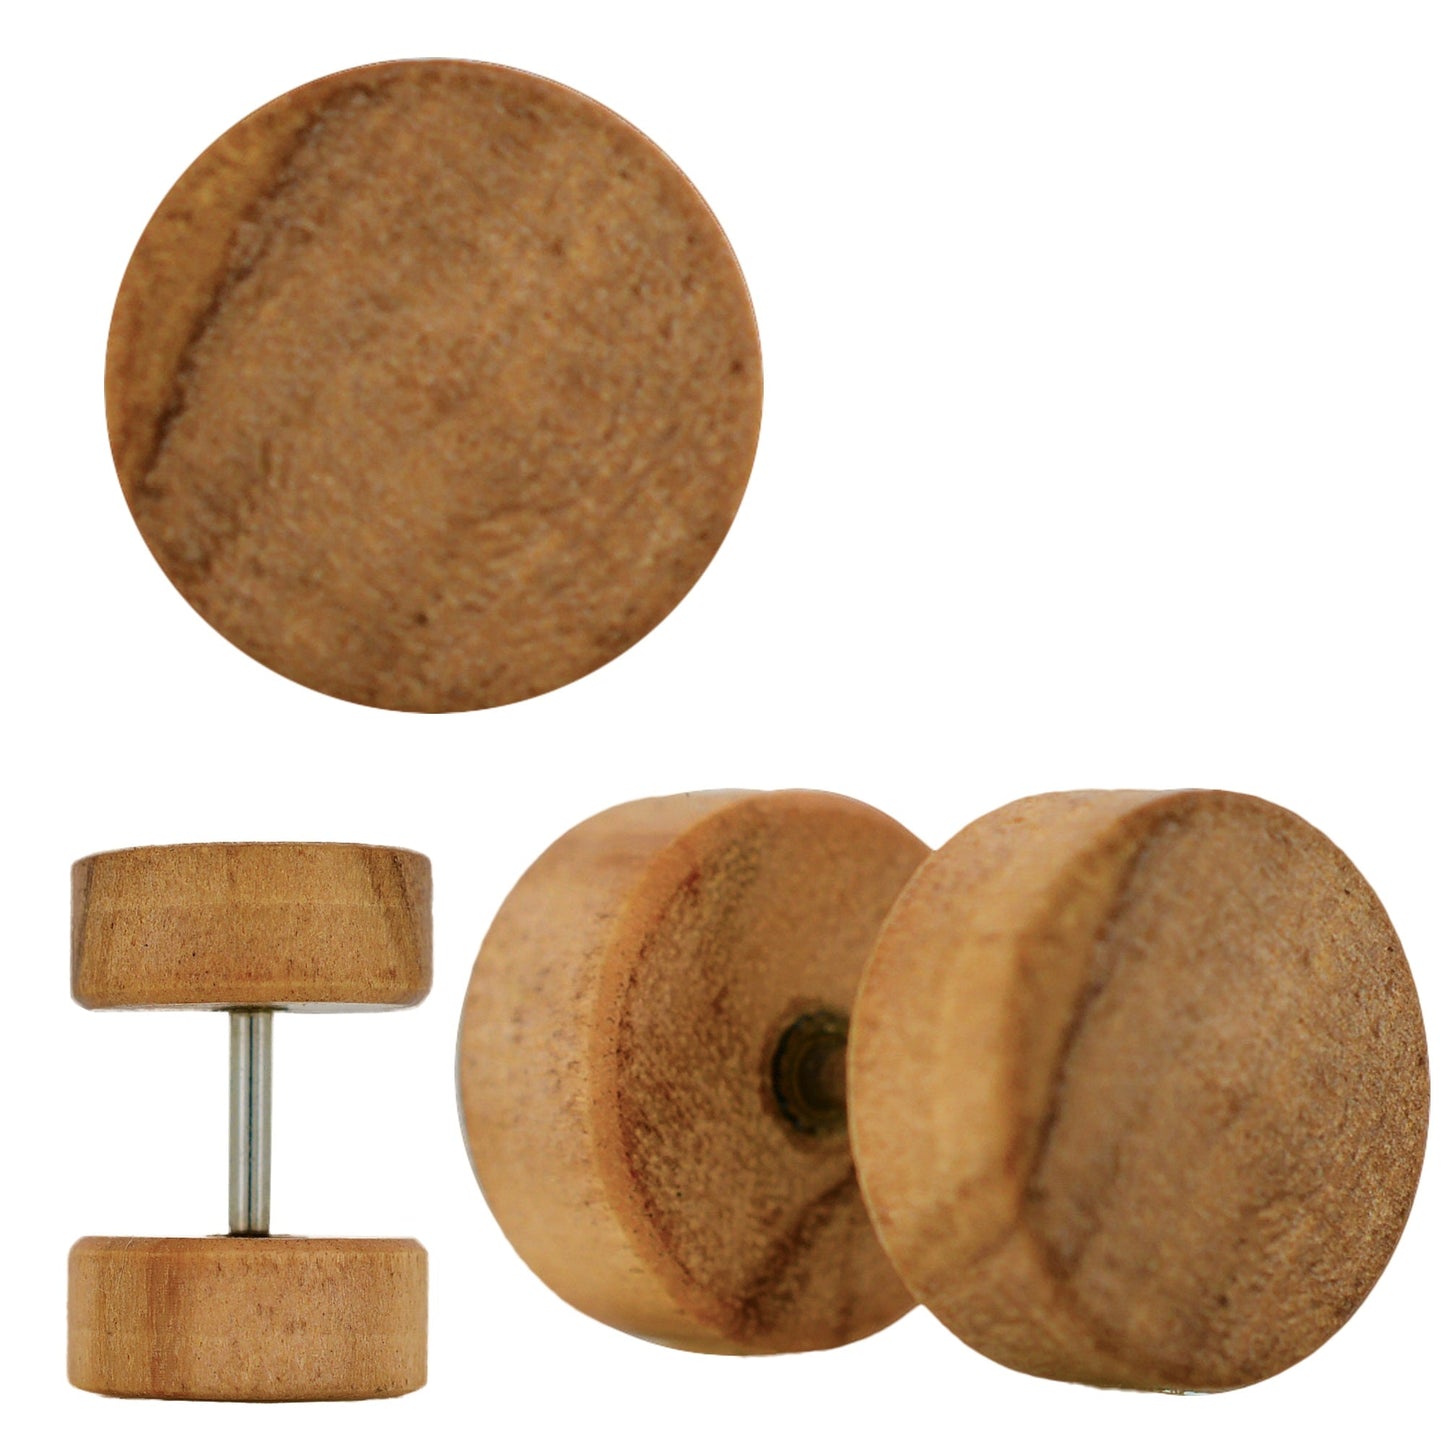 Round Wood Fake Cheater Plug Earrings - Pair